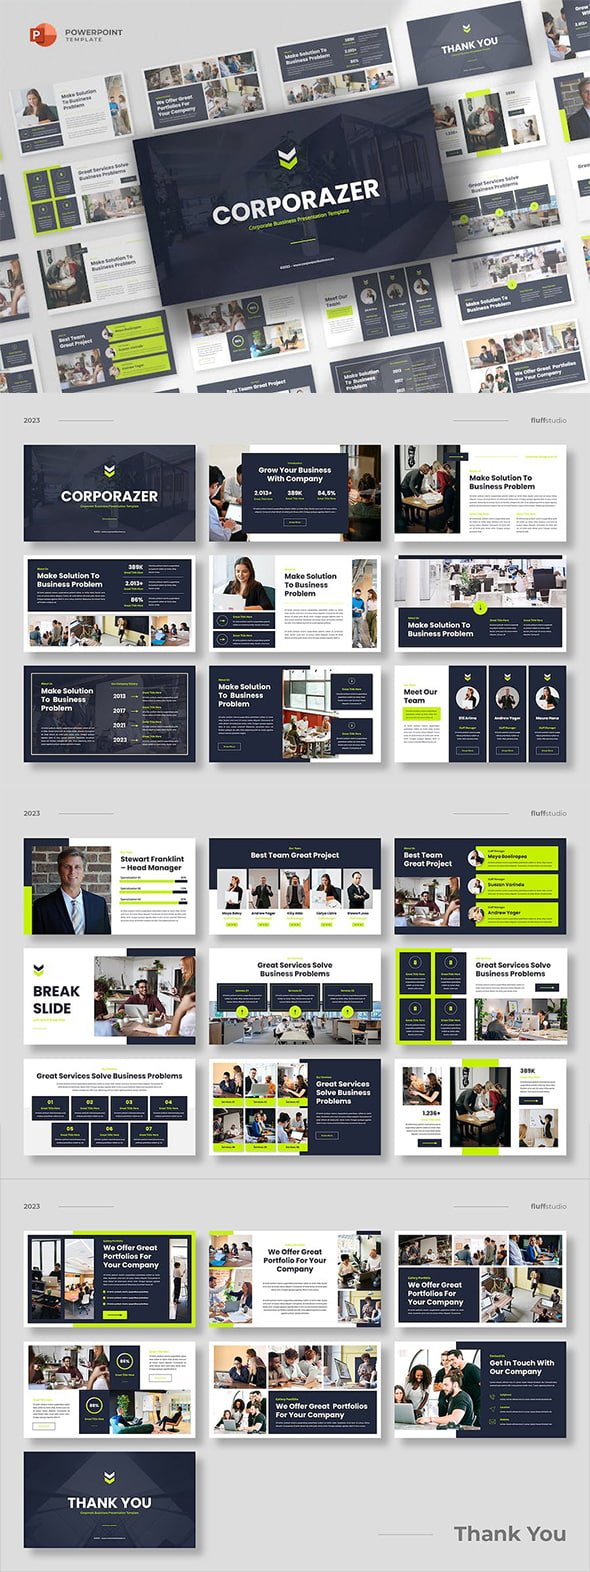 GraphicRiver - Corporazer - Corporate Business Powerpoint Template - 45521421